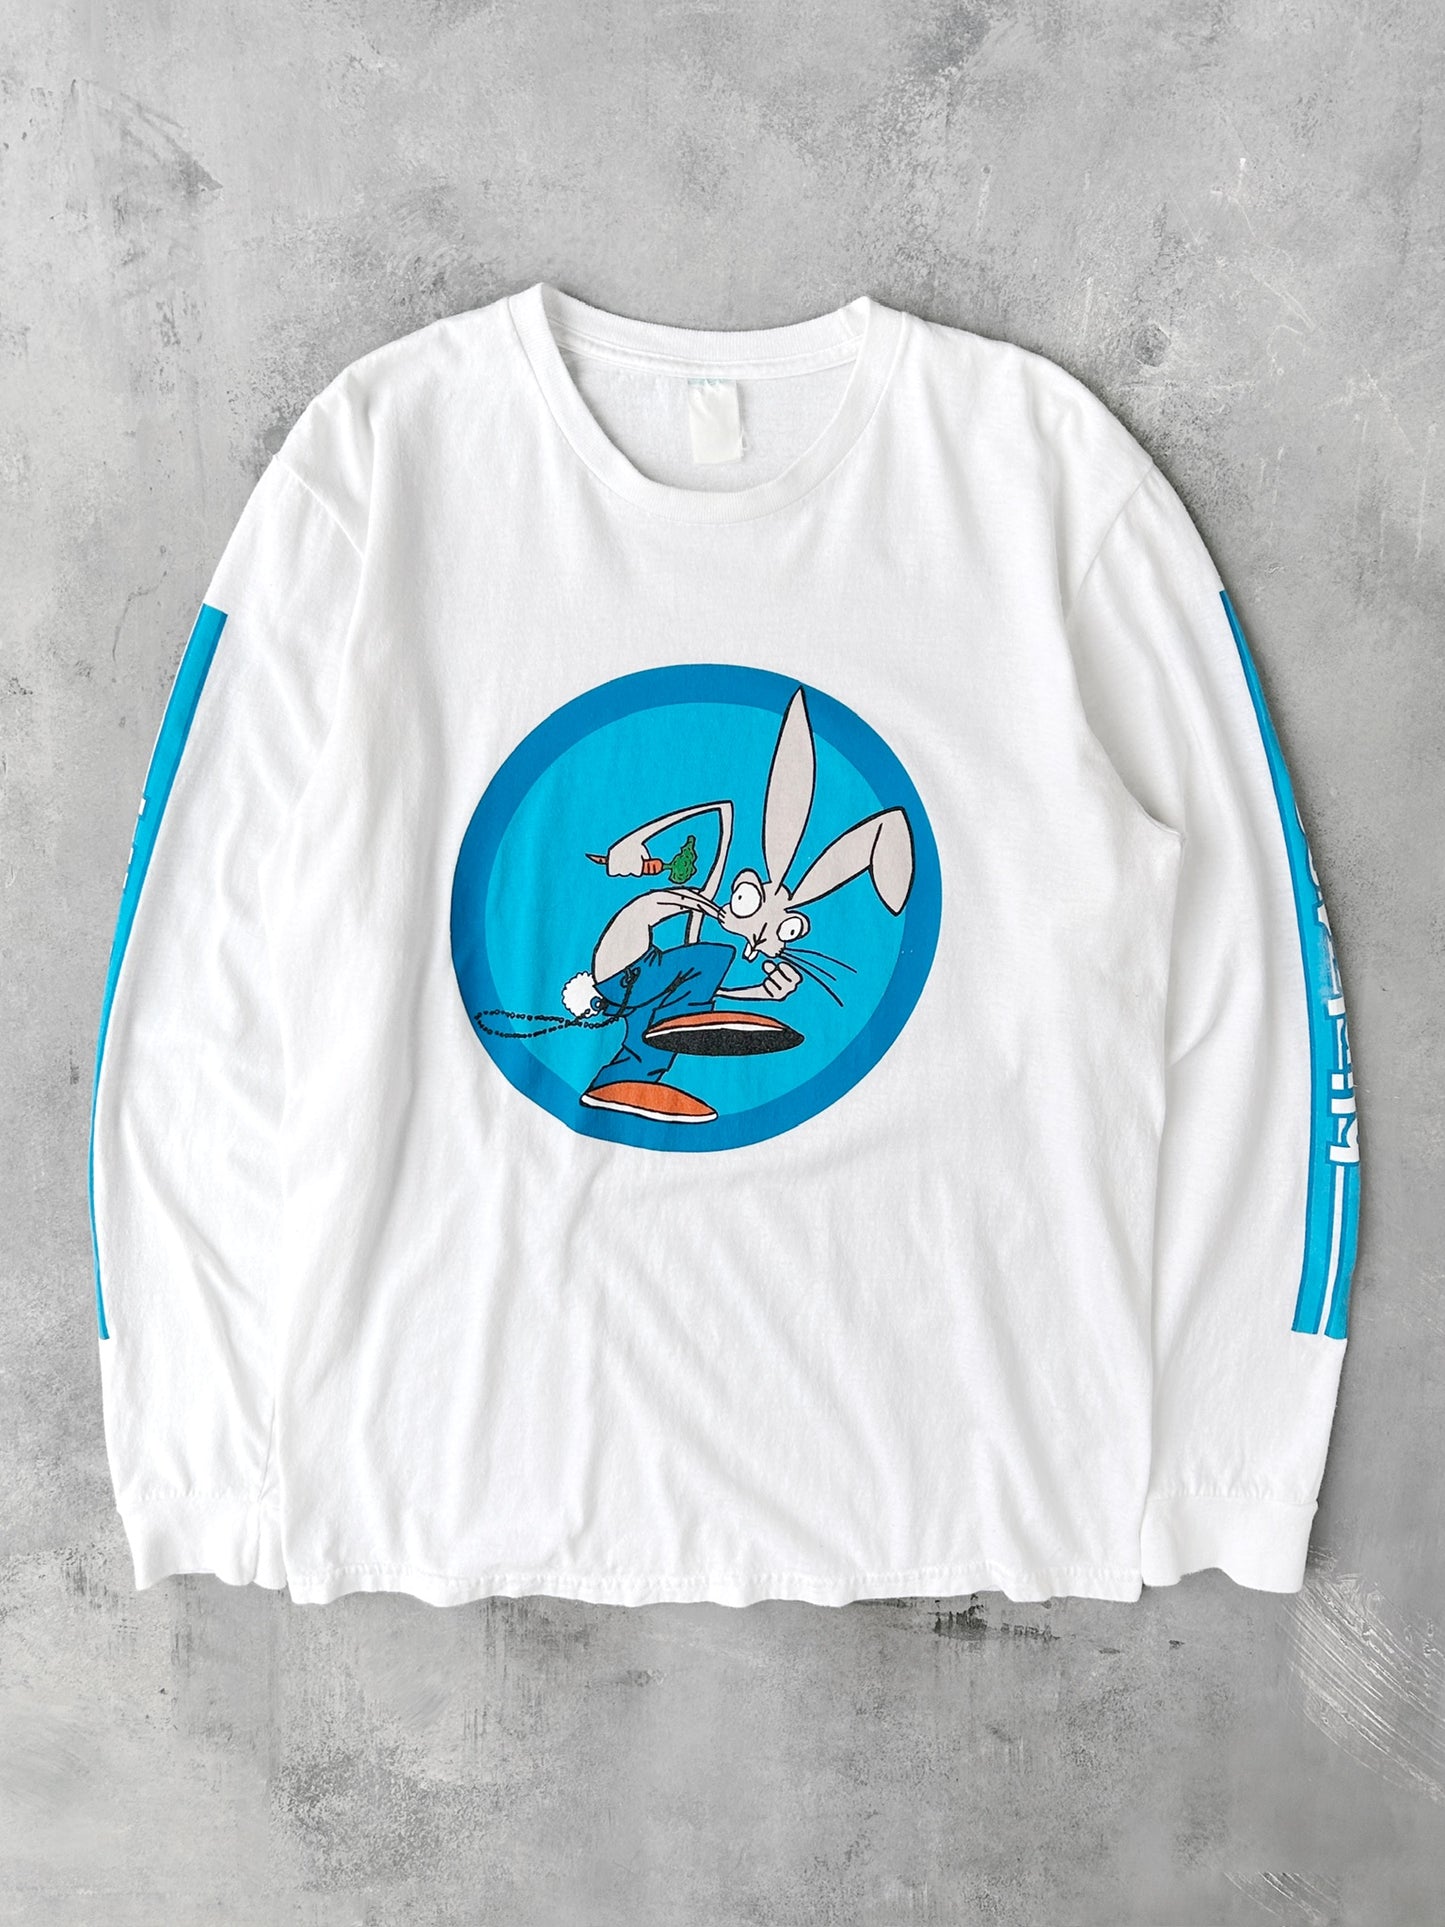 Blink-182 T-Shirt 90's - Medium / Large